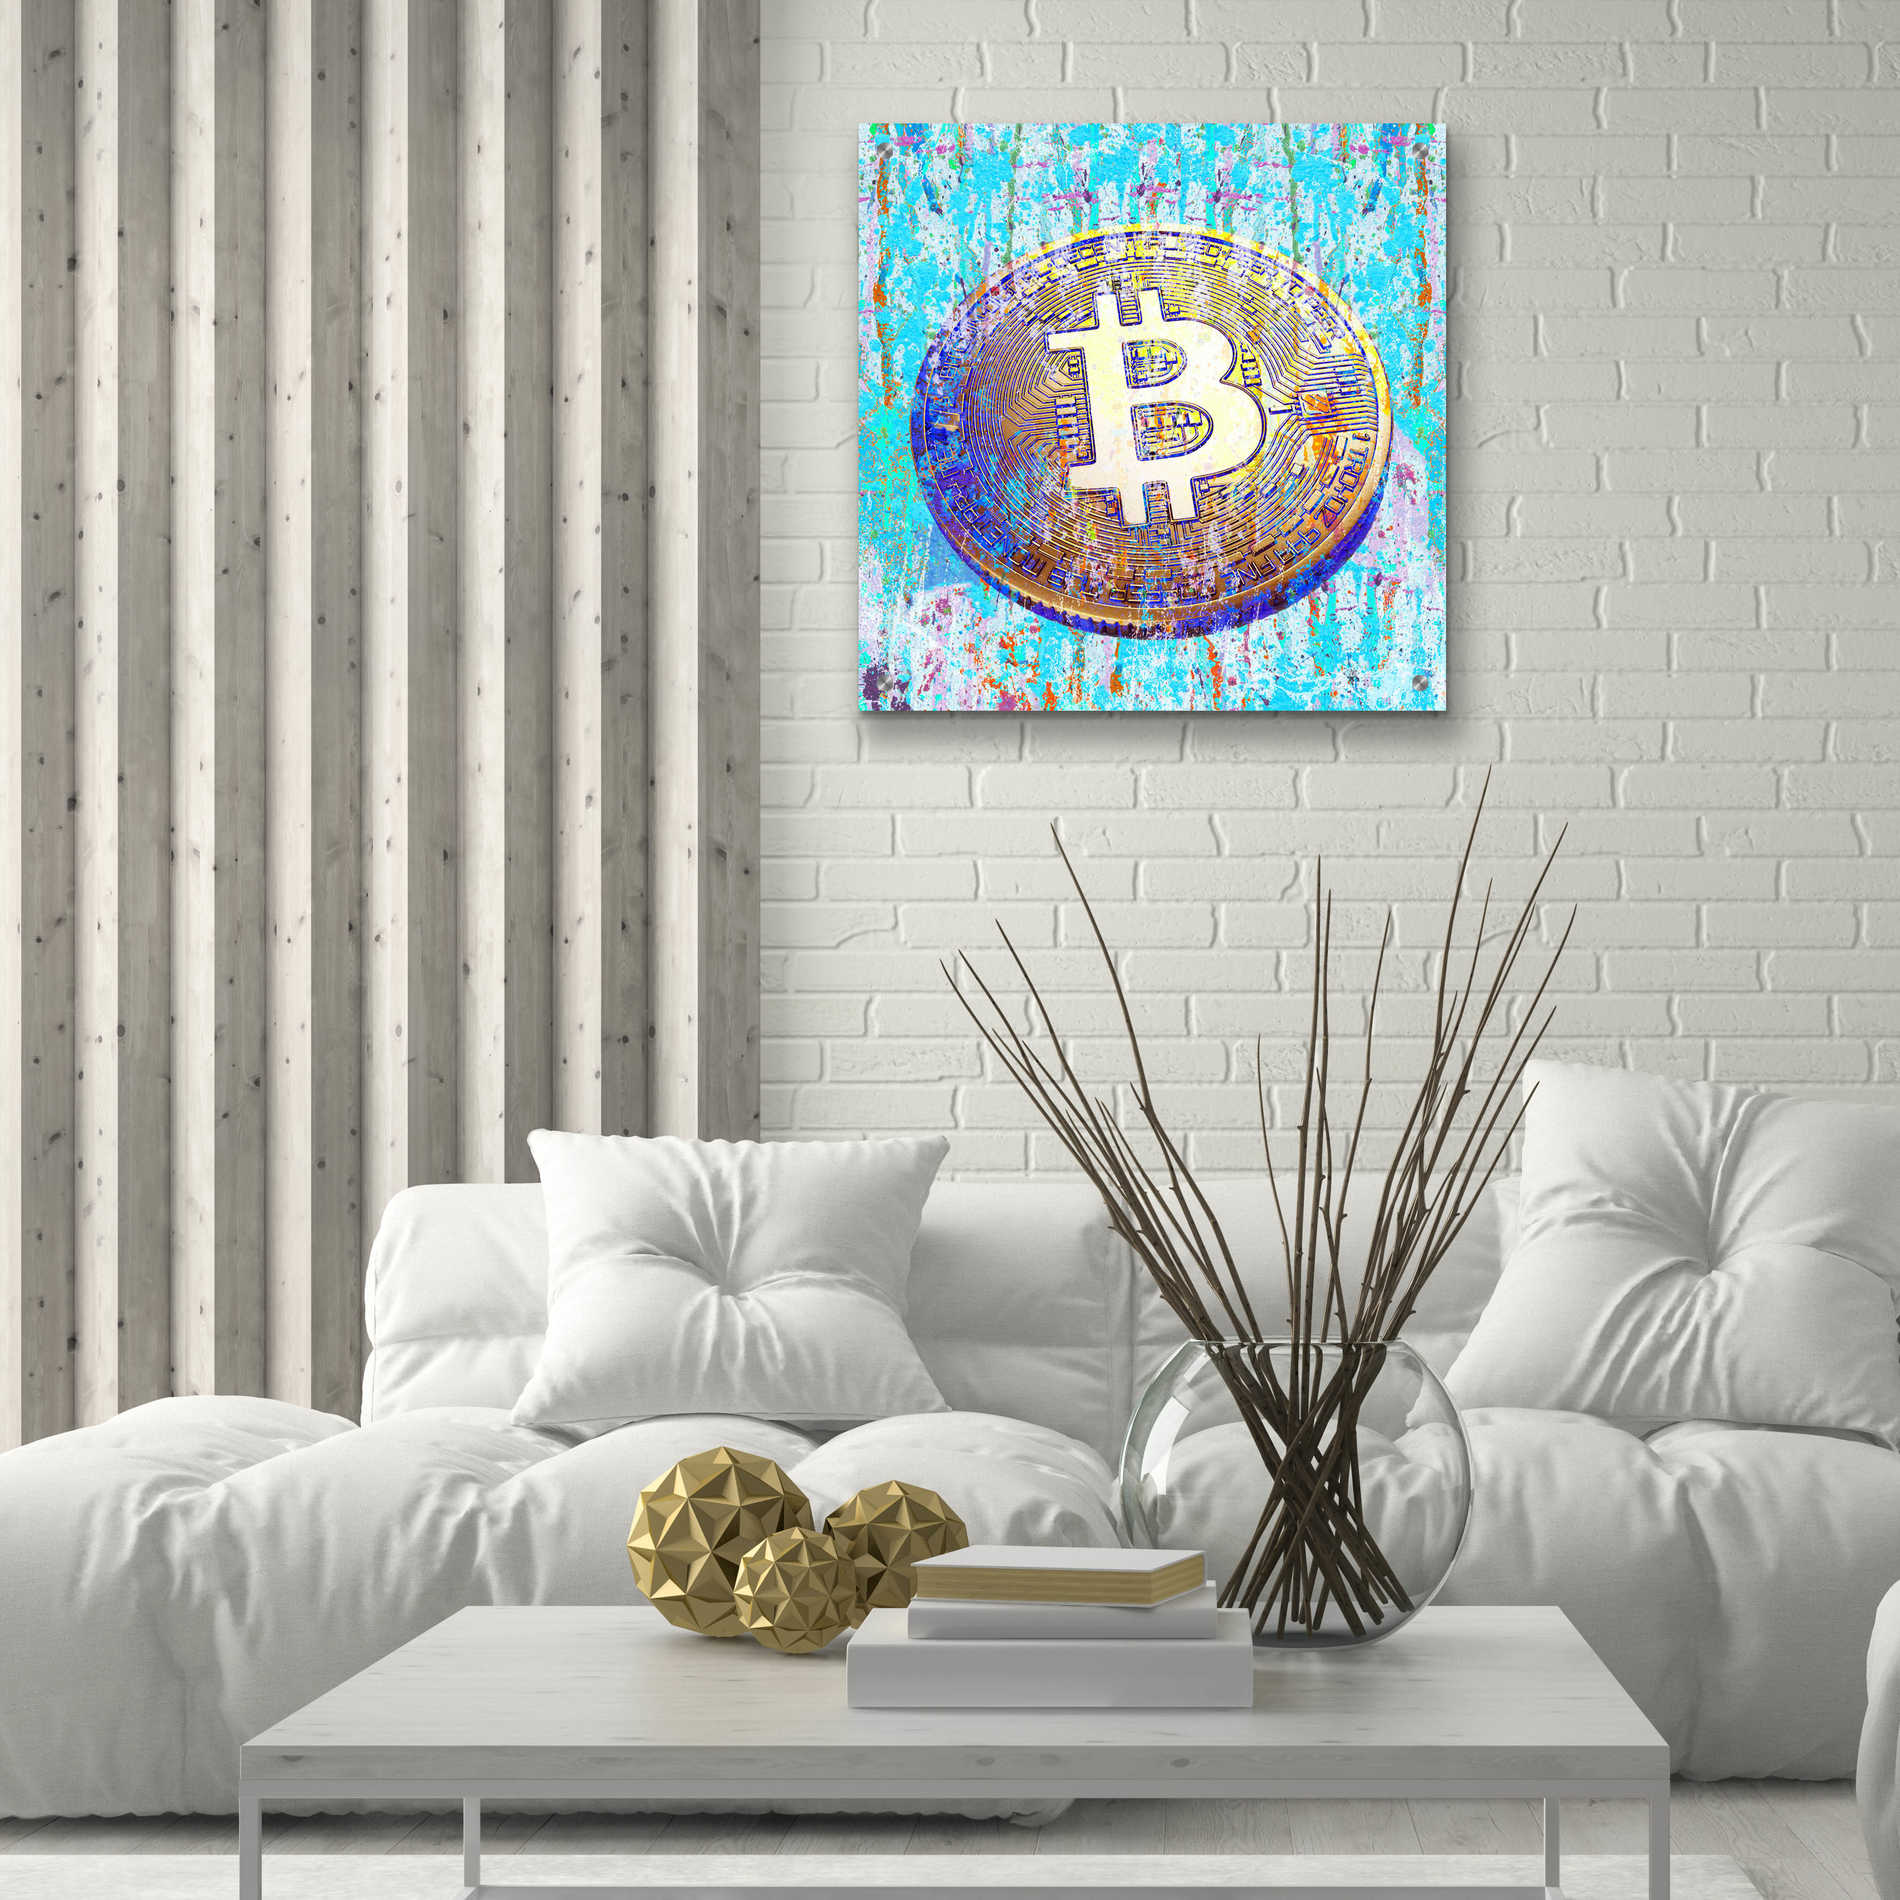 Epic Art 'The Inextinguishable Bitcoin,' Acrylic Wall Art,24x24